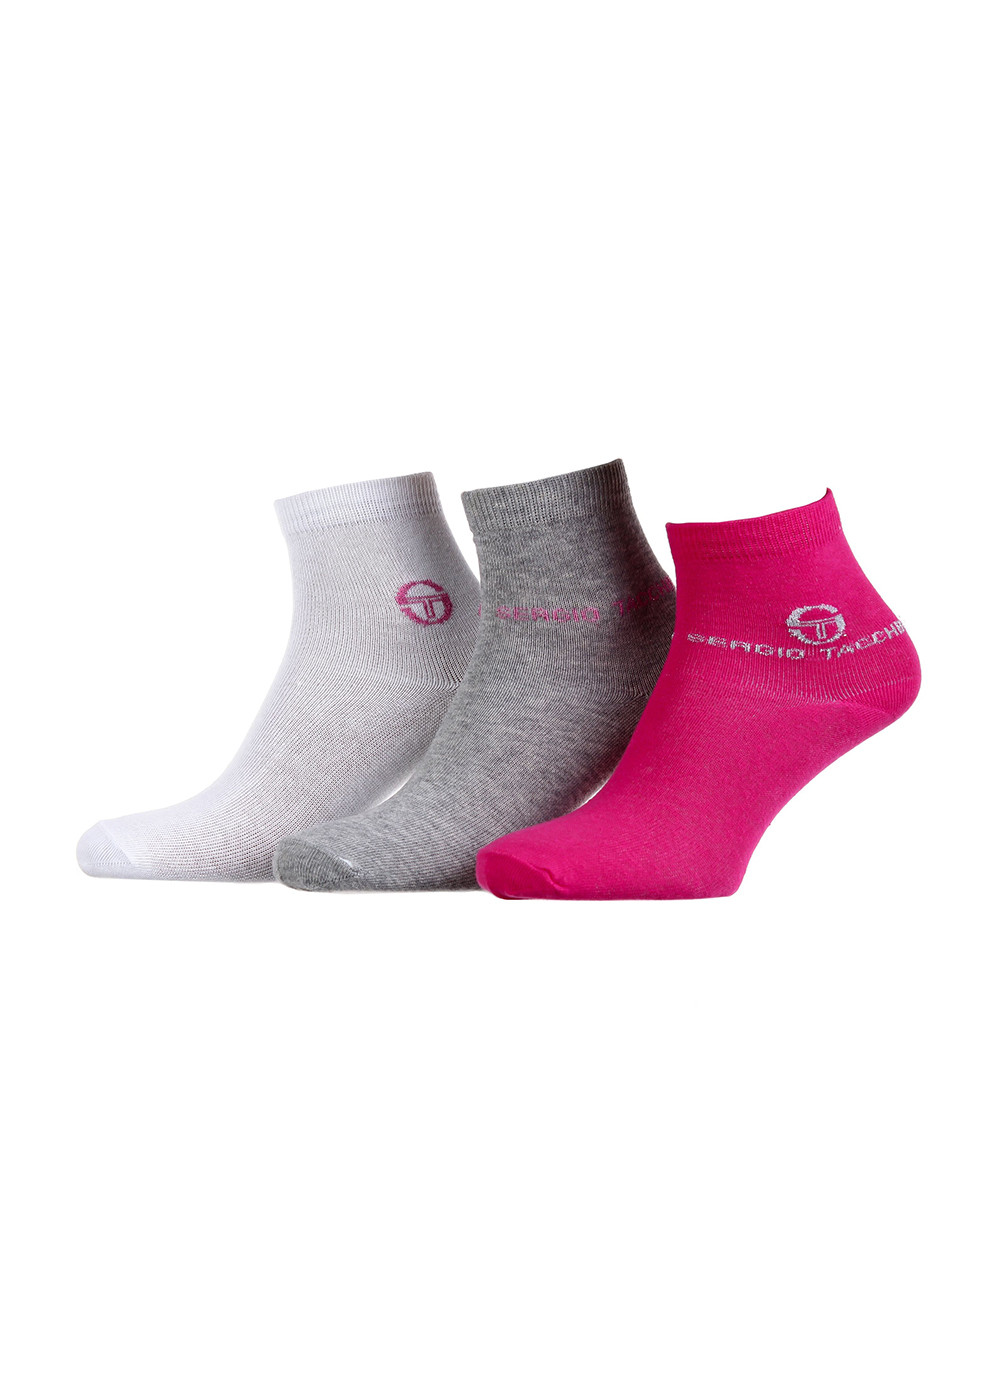 Шкарпетки 3-pack 36-41 white/gray/pink Sergio Tacchini (259296237)